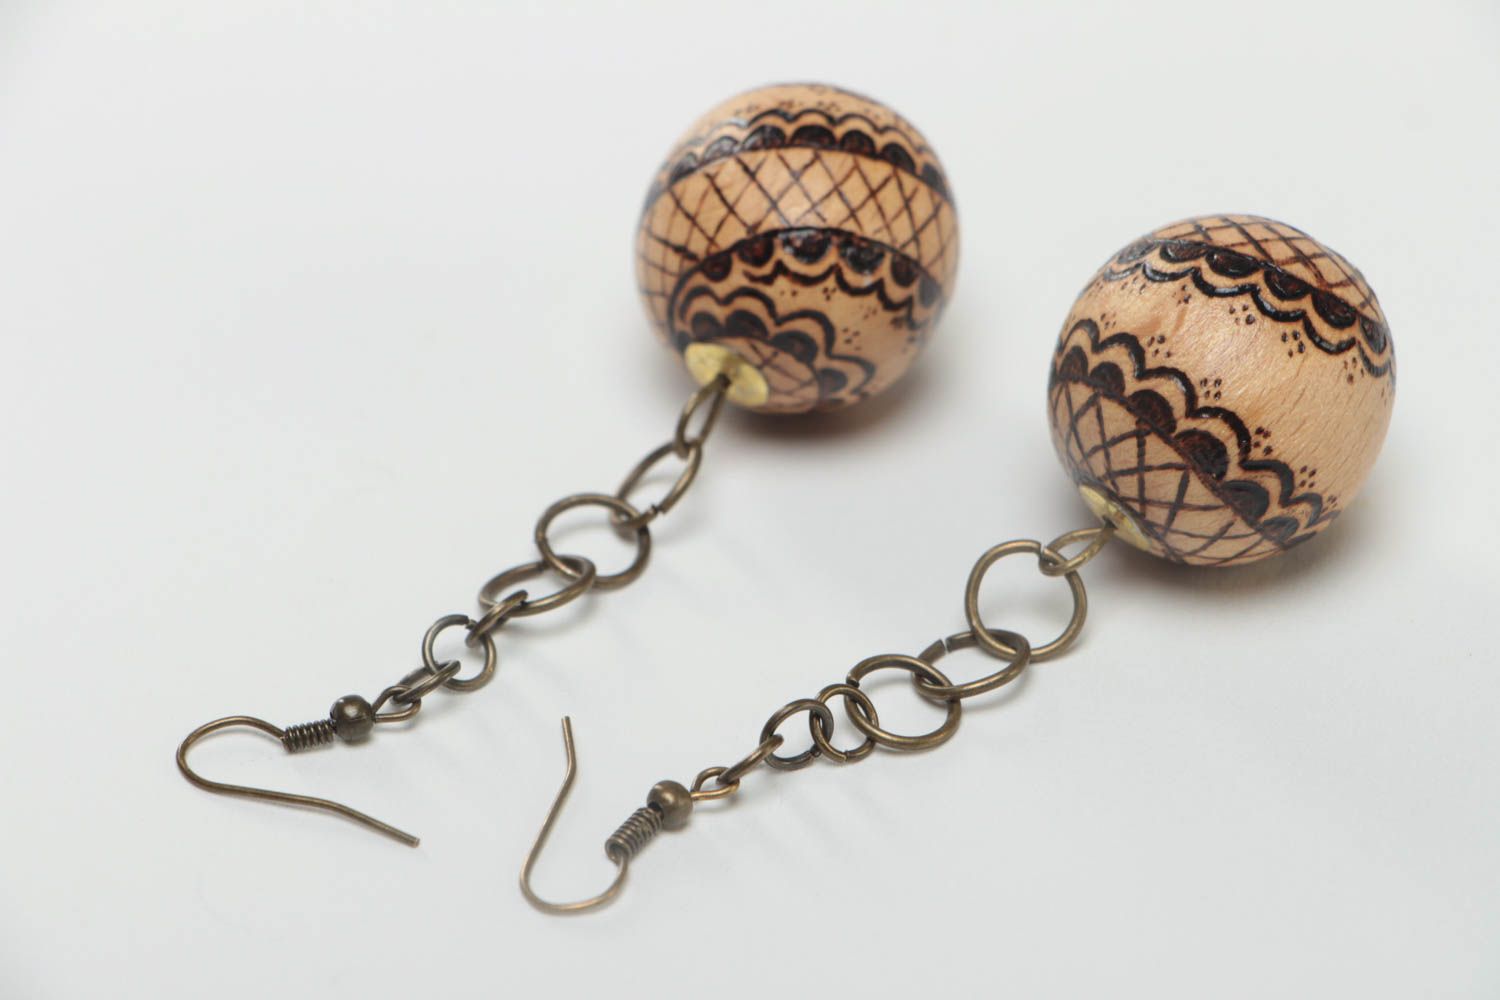 Ball earrings wooden jewelry handmade earrings for girls designer accessories photo 4